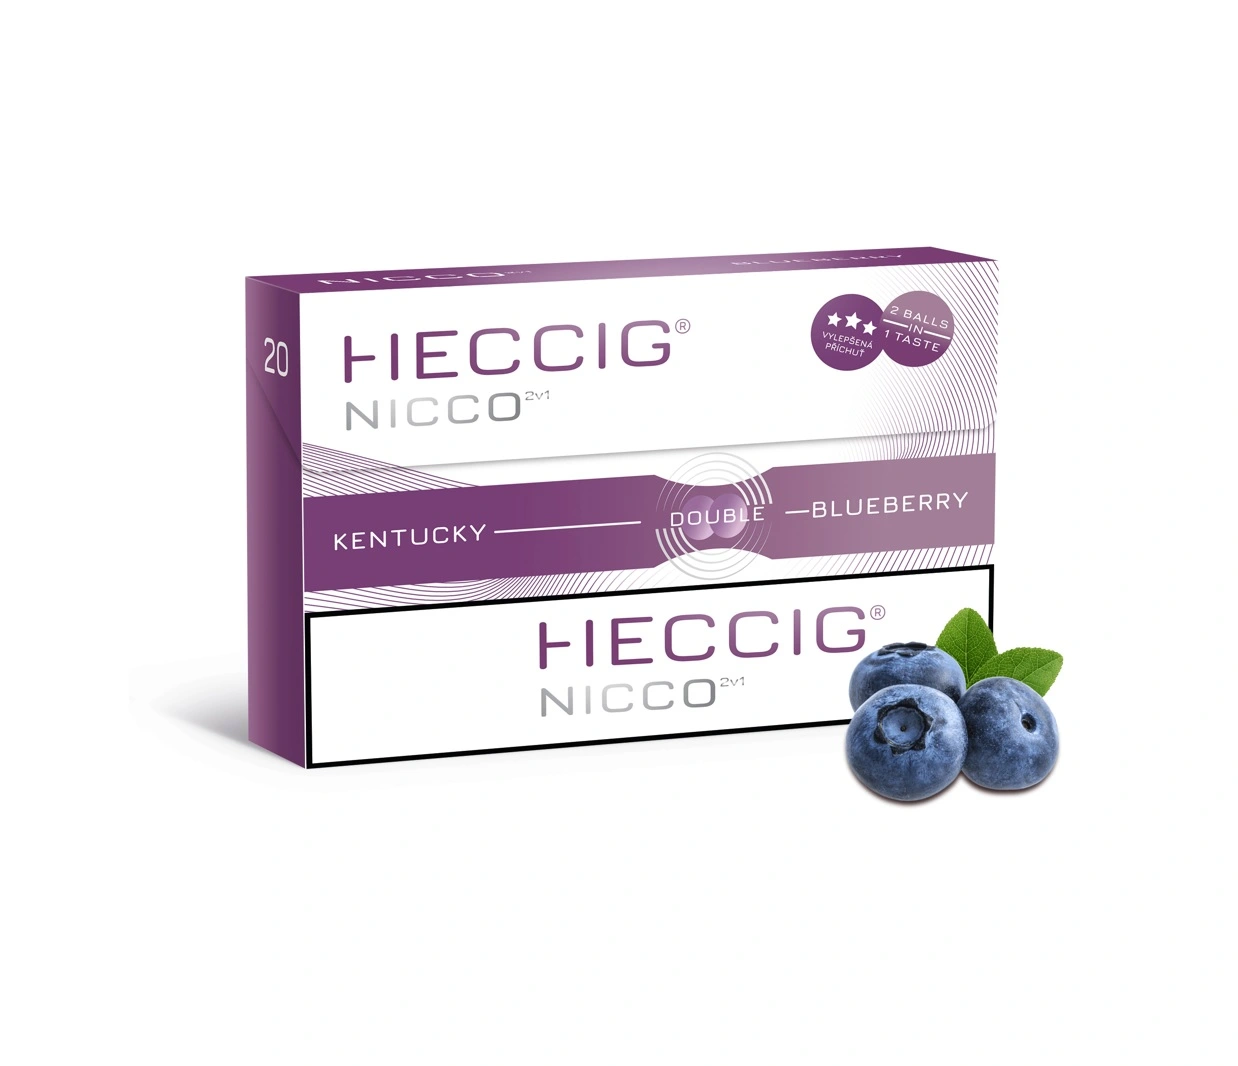 Heccig nicco blueberry